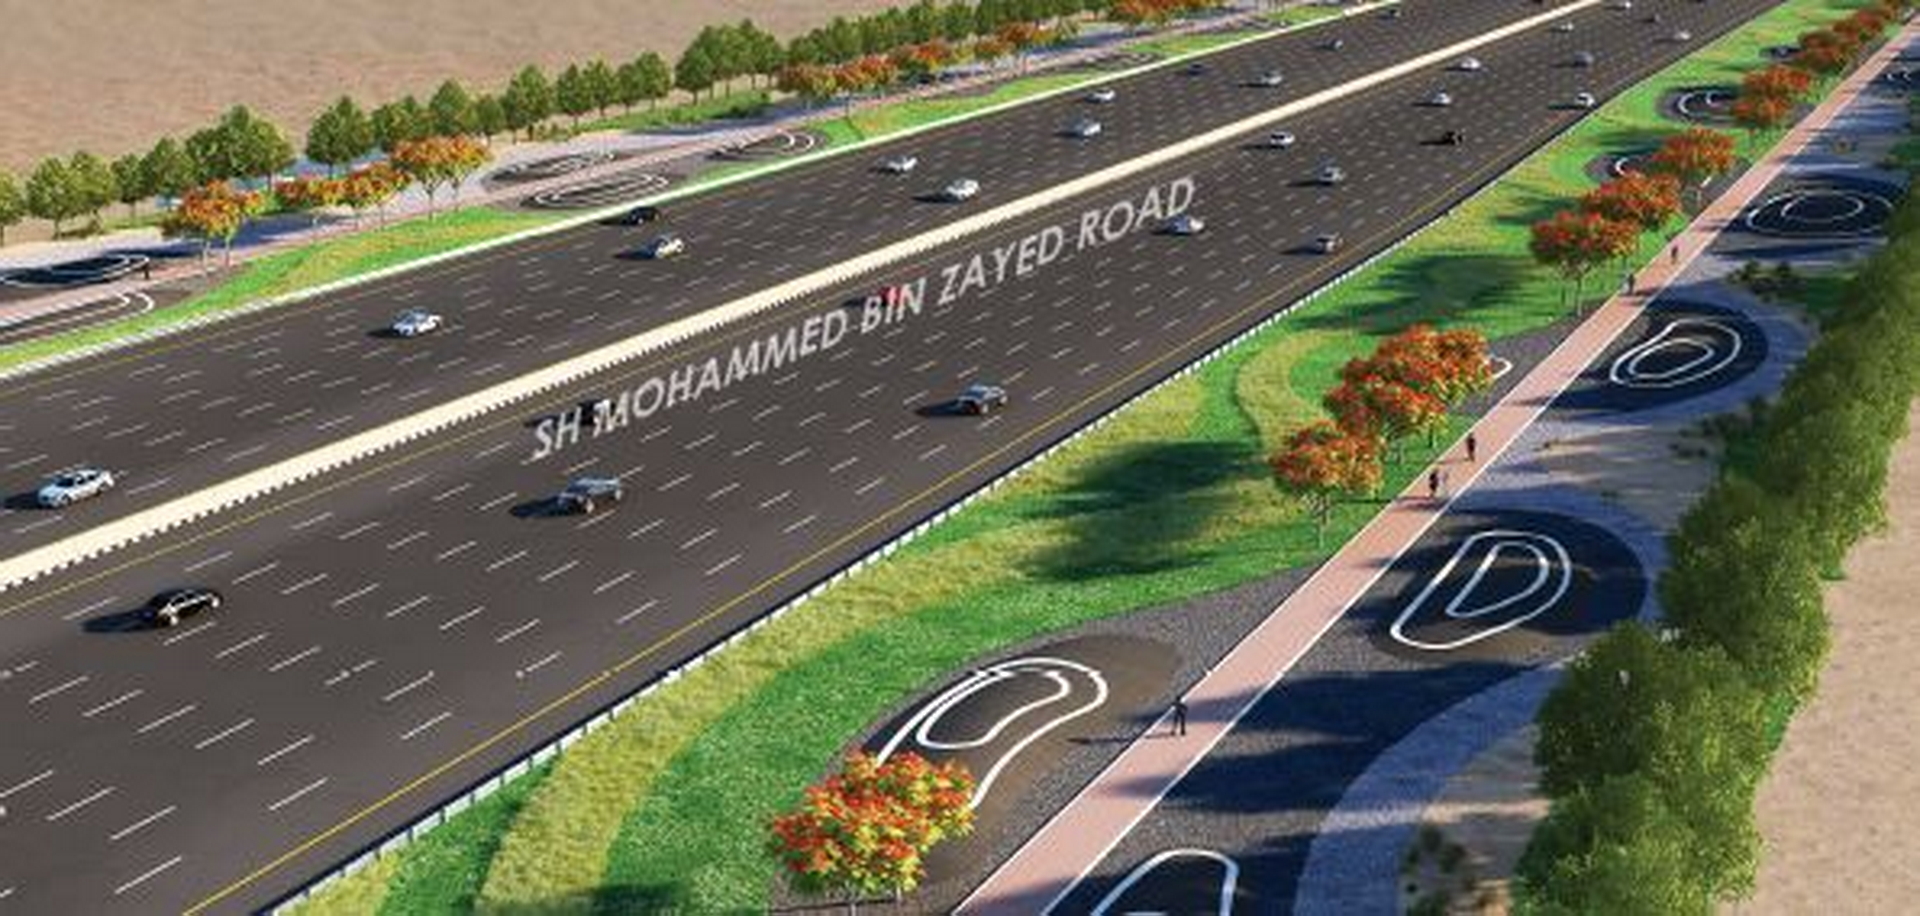 Expo 2020 Dubai Road Landscaping 